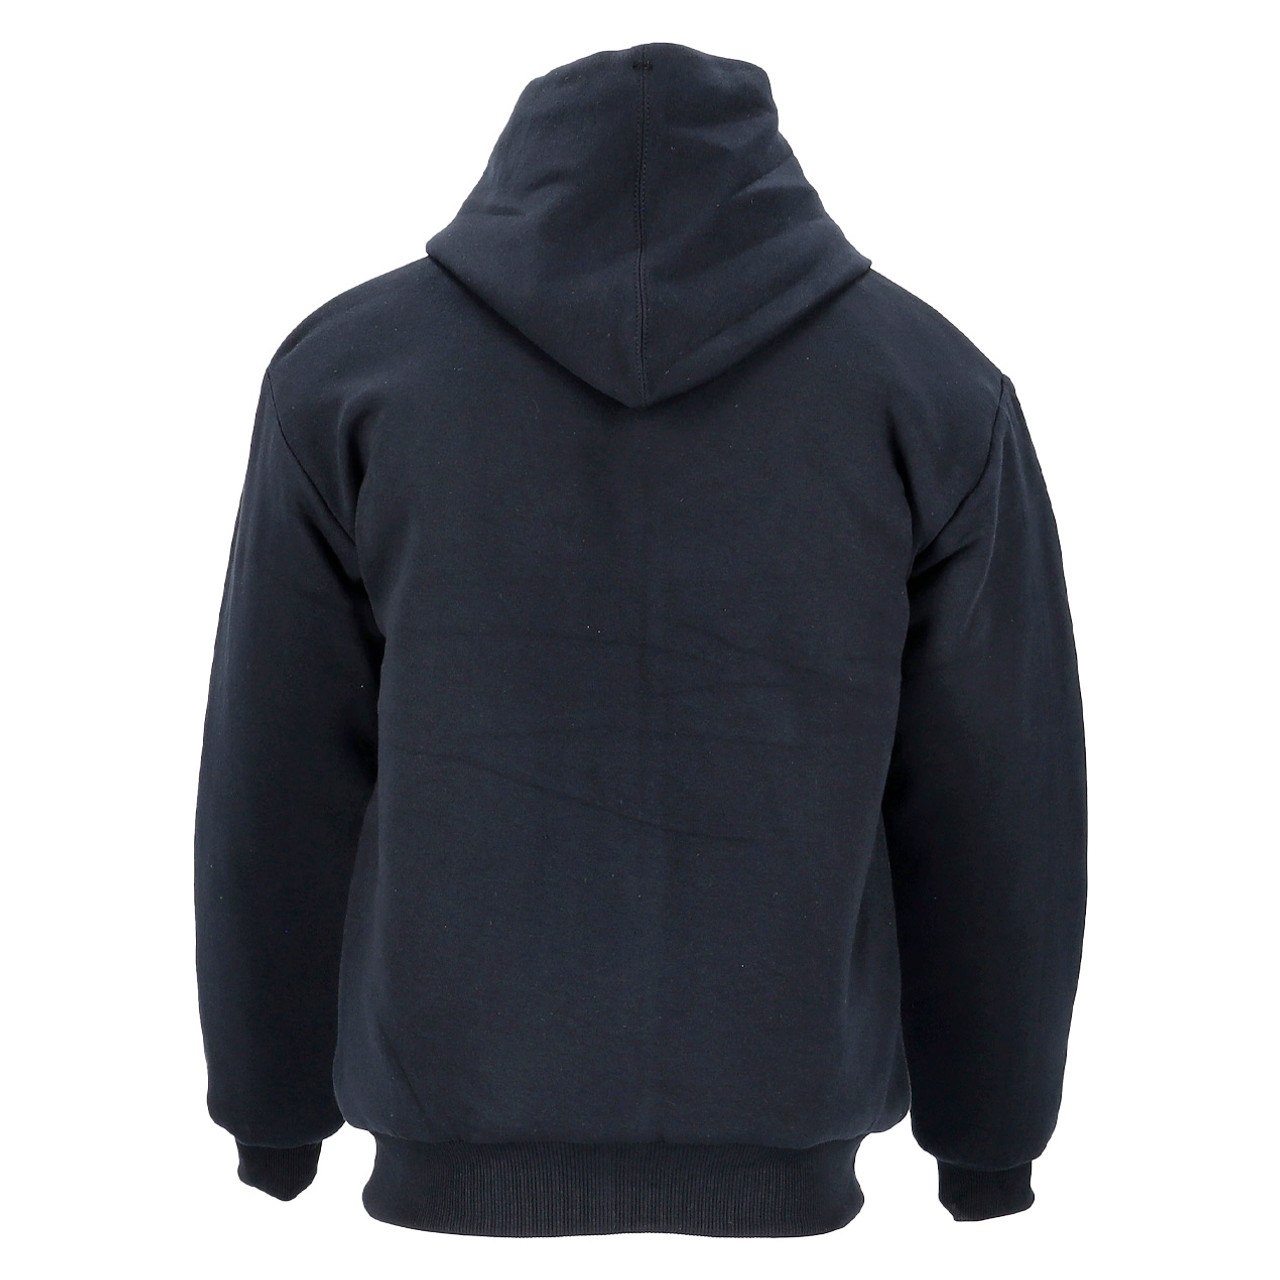 Insulated Quilted Sweatshirt #647 - RefrigiWear